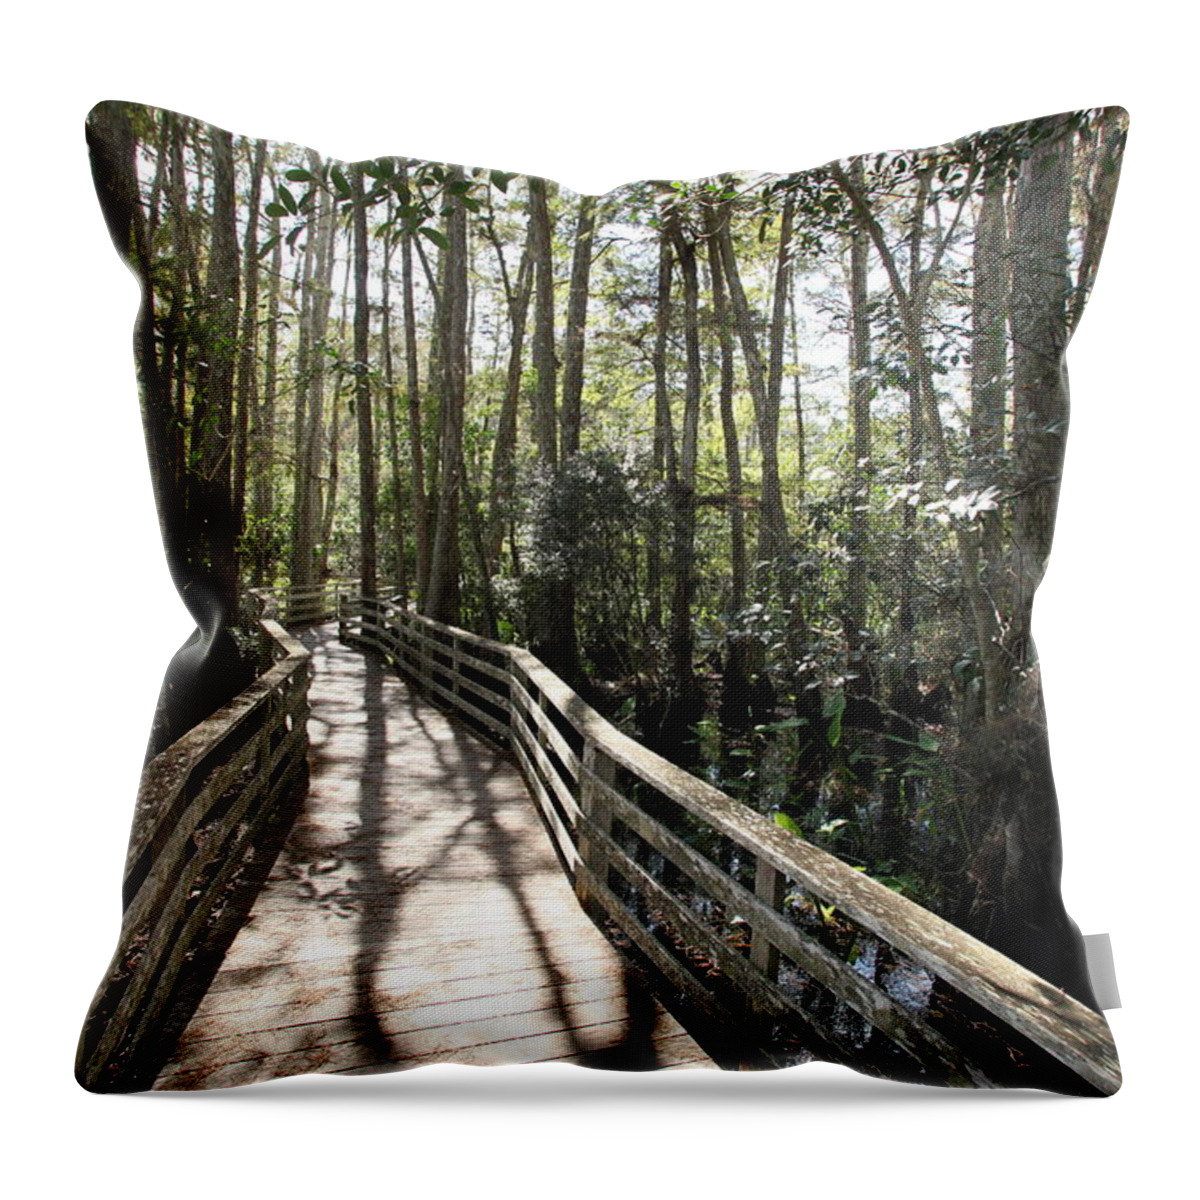 Corkscrew Swamp Sanctuary Throw Pillow featuring the photograph Corkscrew Swamp 697 by Michael Fryd